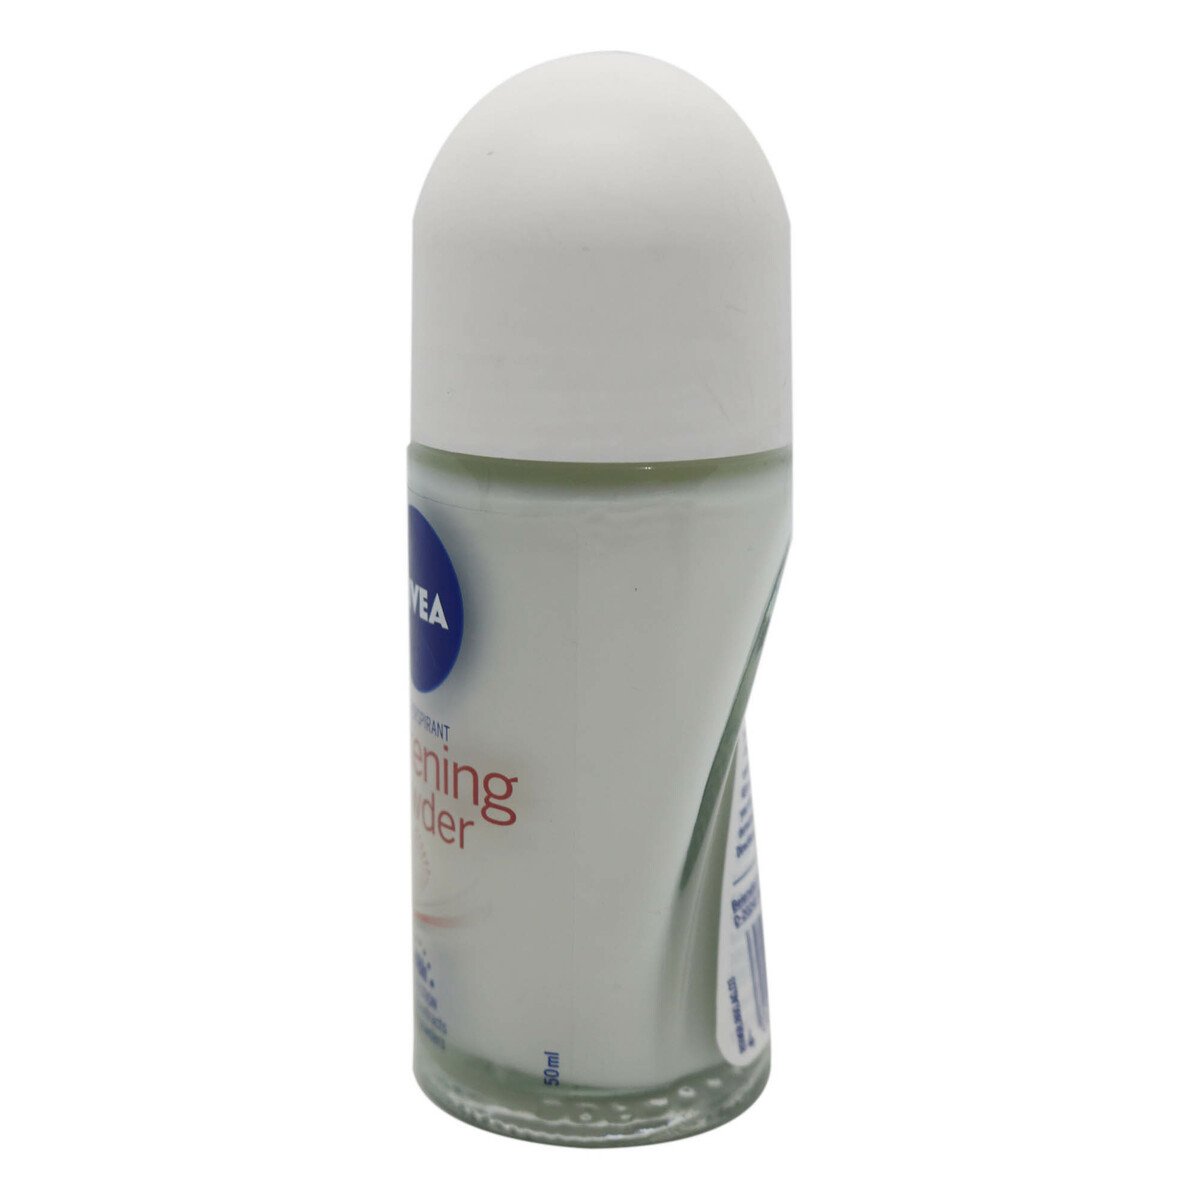 Nivea Deodorant Whitening Powder Roll On 50ml